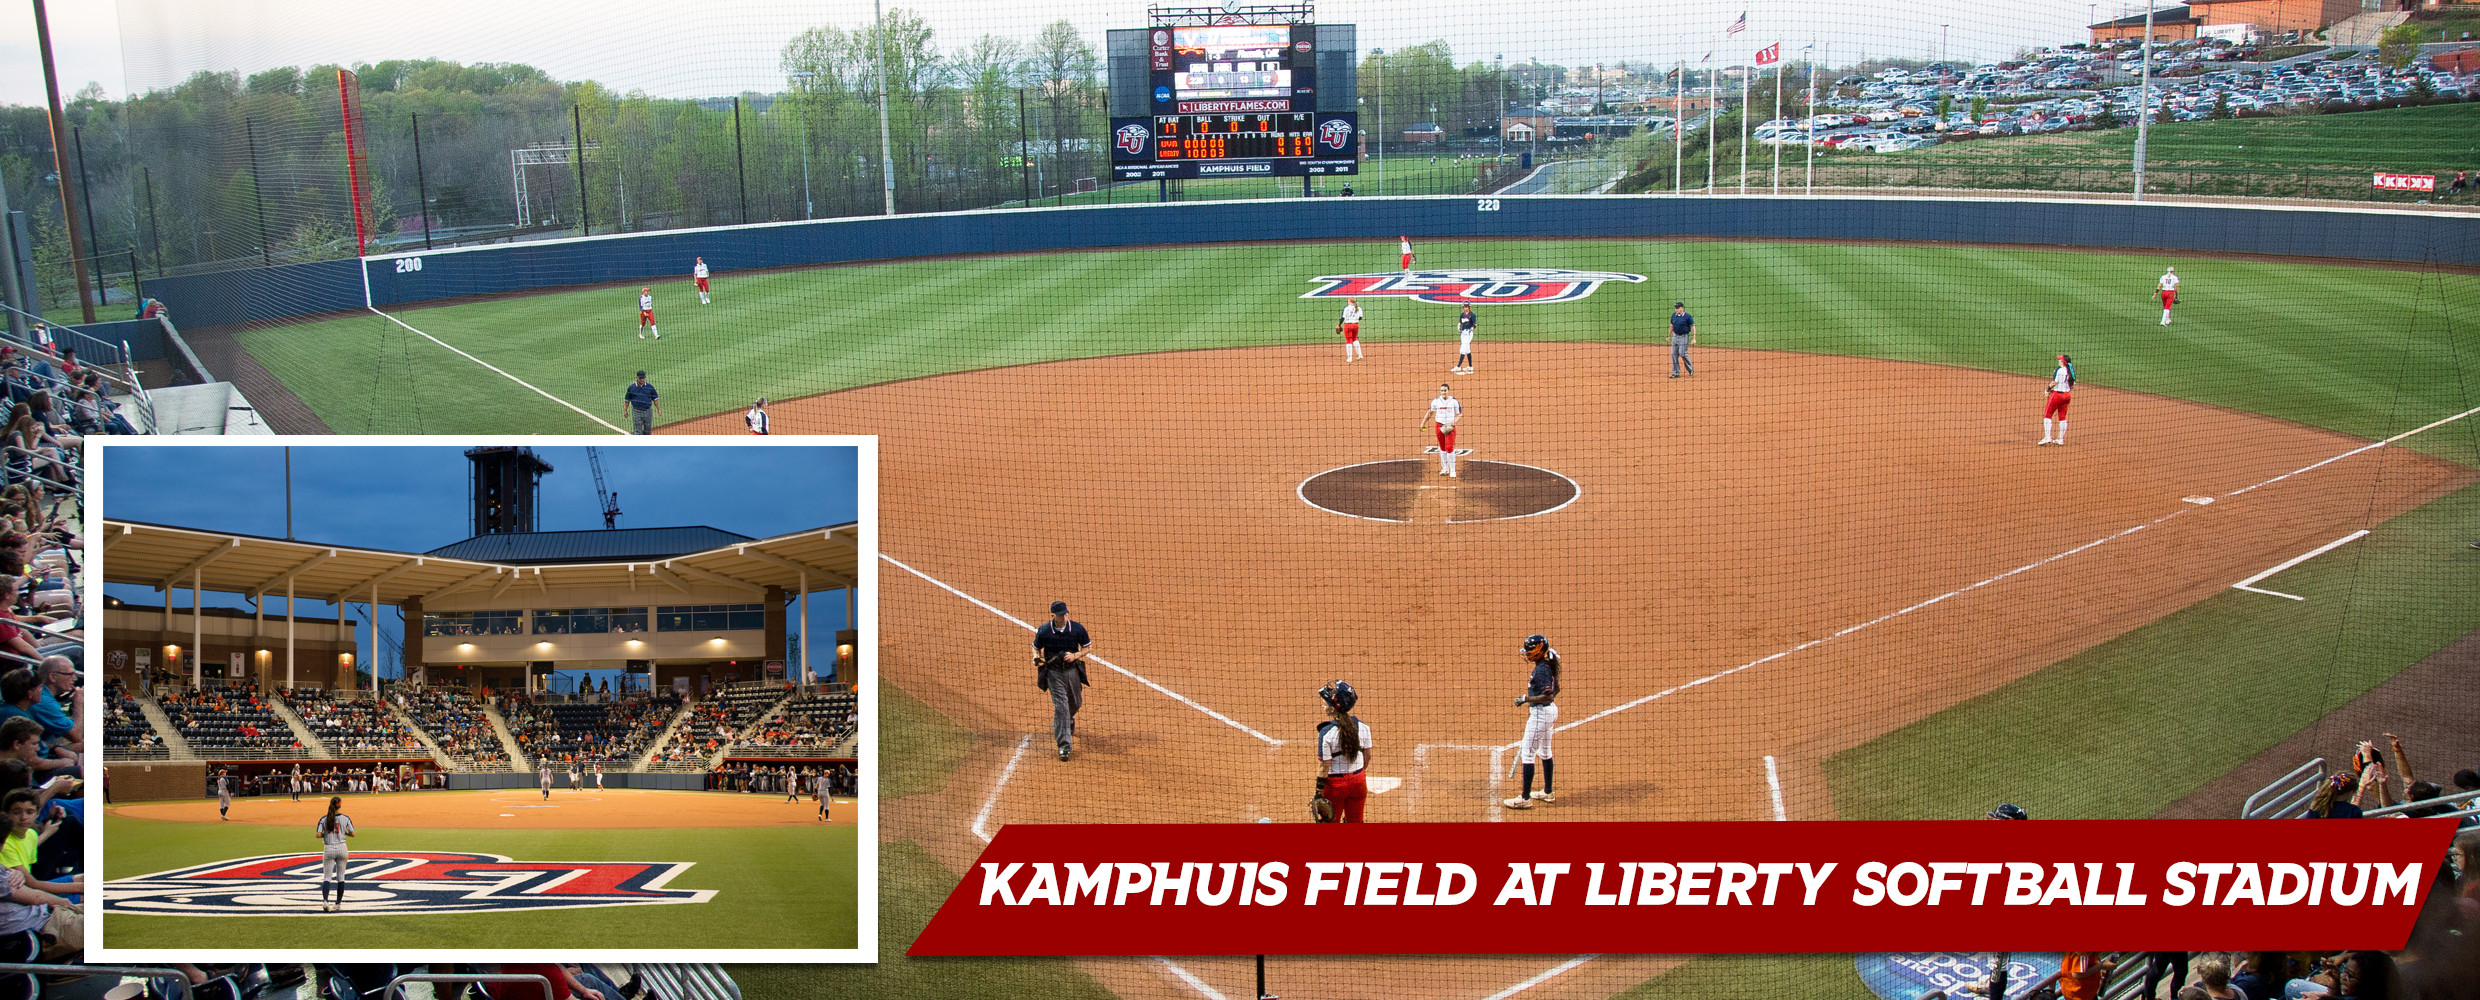 Athletics Facilities - Kamphuis Field at Liberty Softball Stadium ...